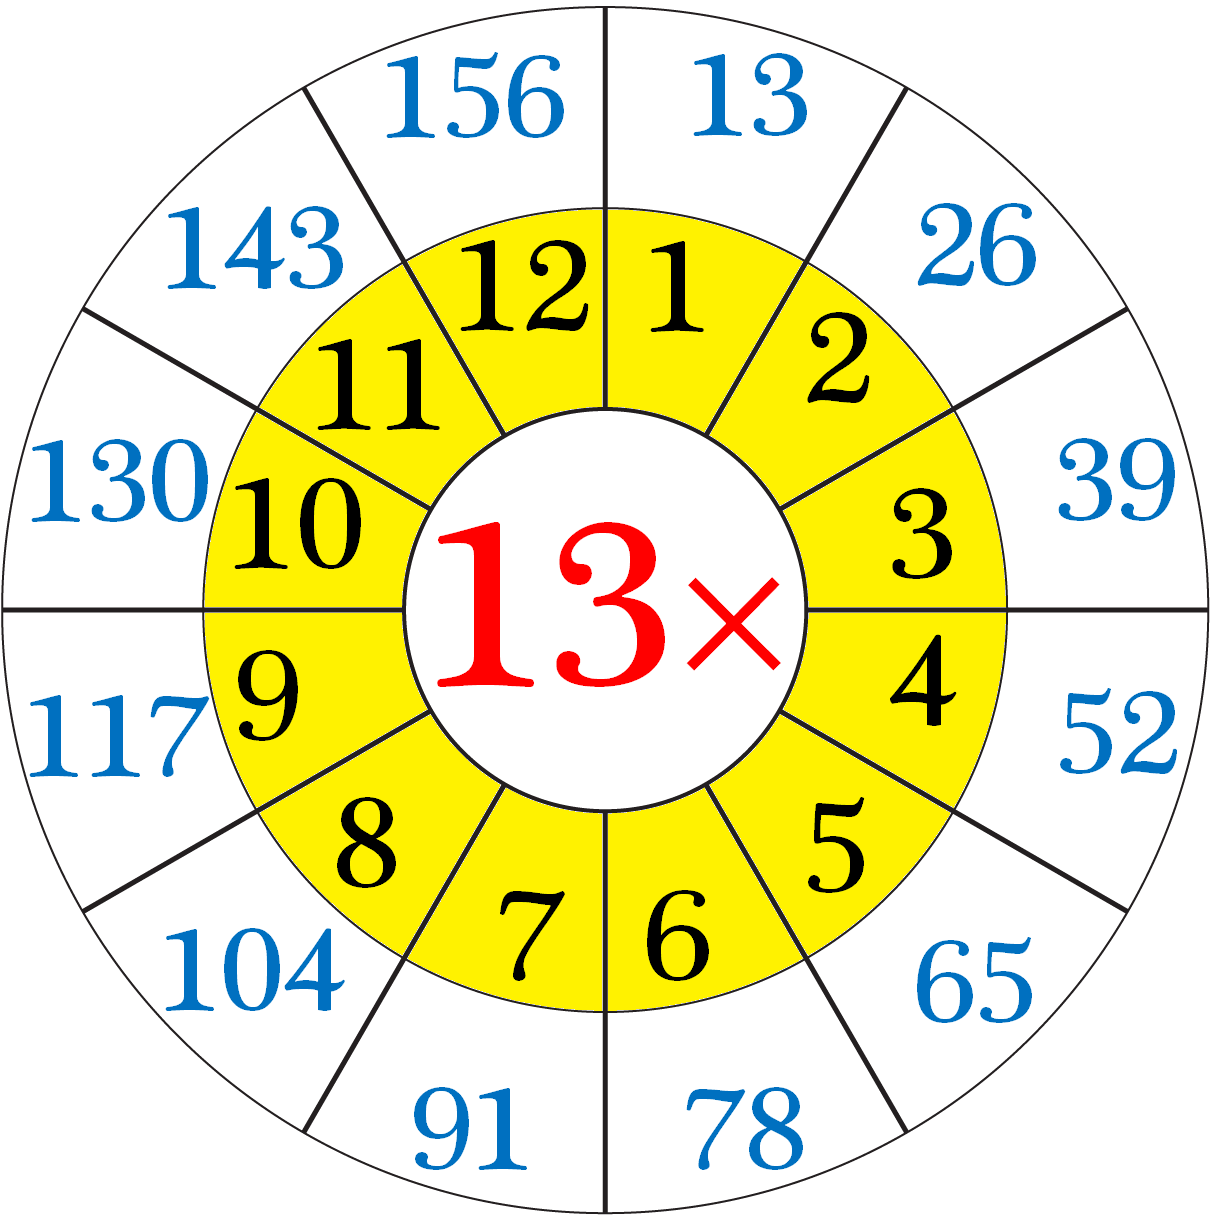 Multiplication Table of Thirteen